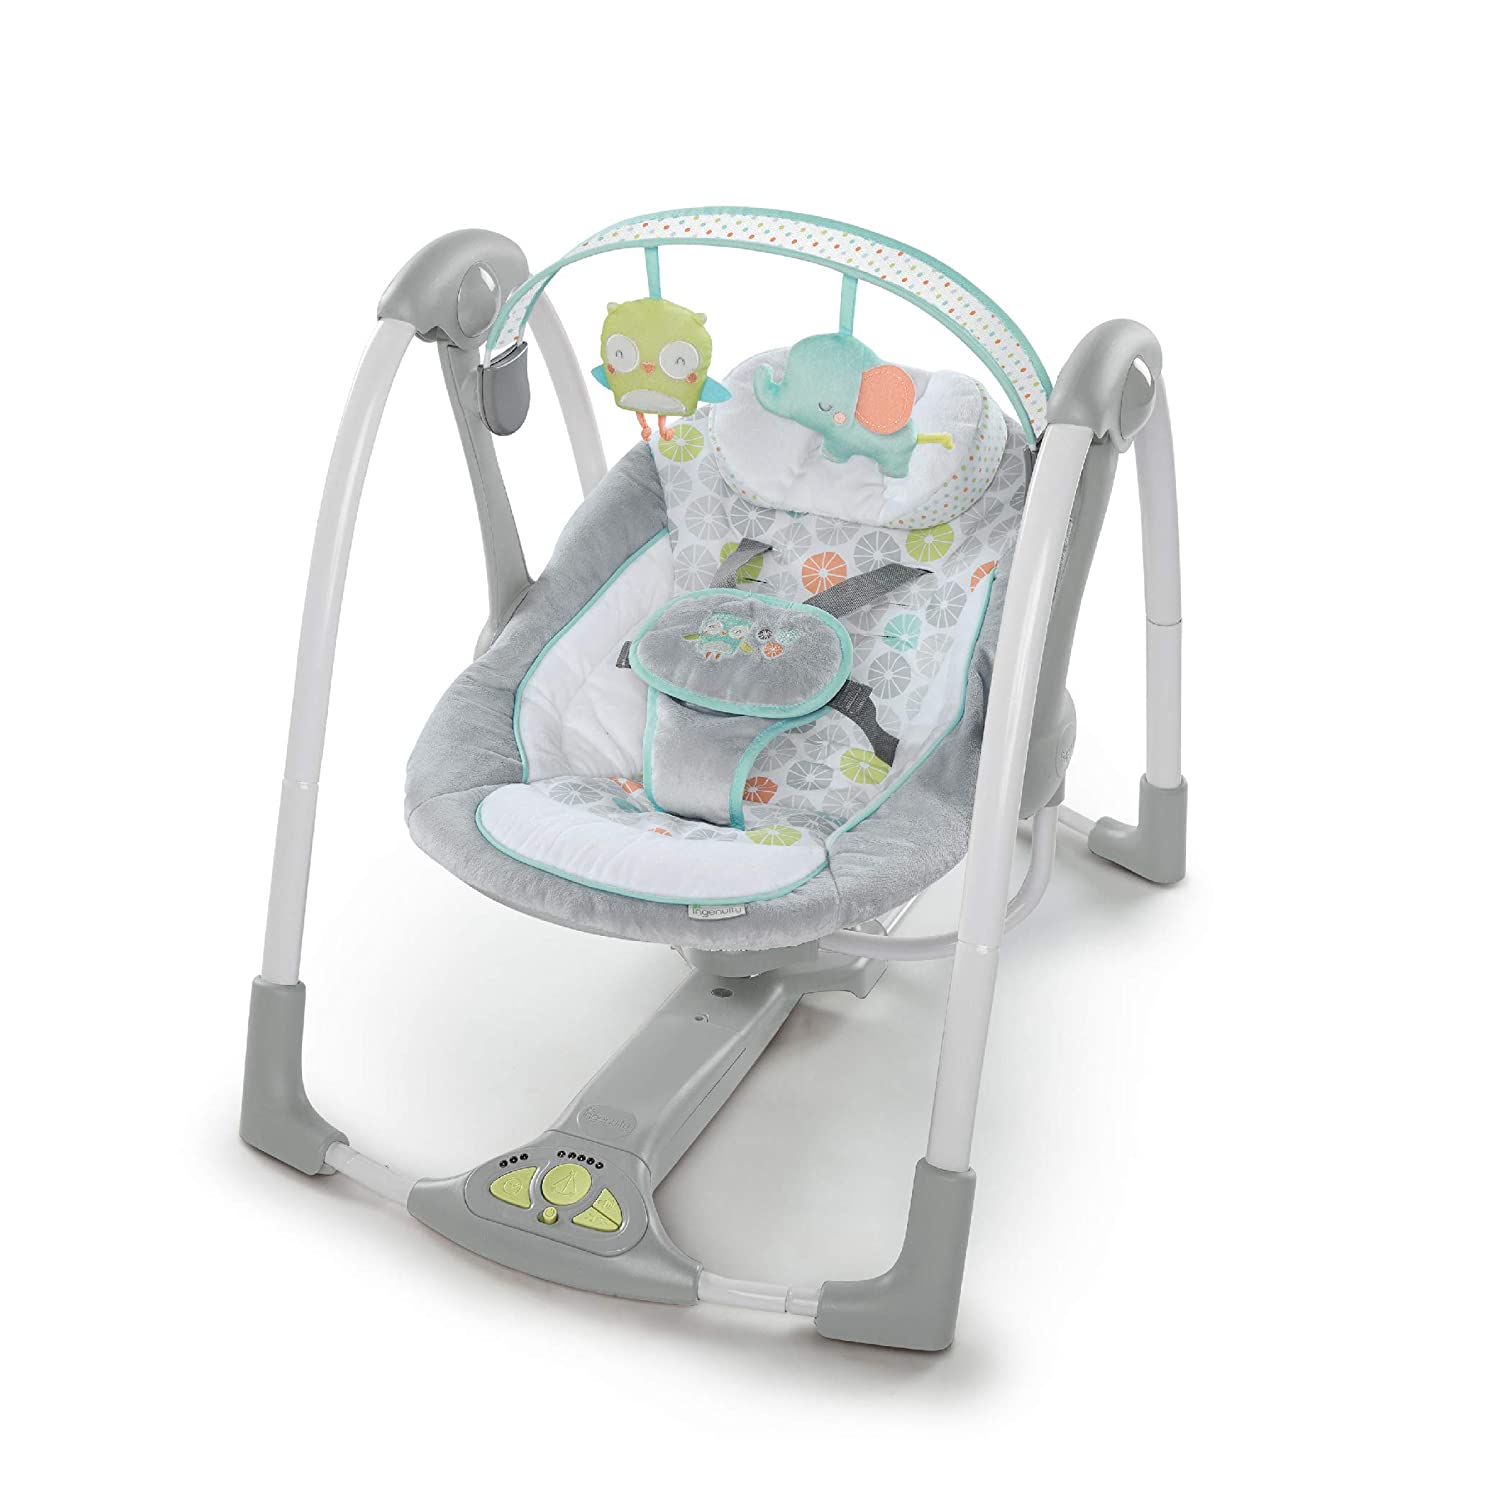 Review of - Ingenuity Swing 'n Go Portable Baby Swing